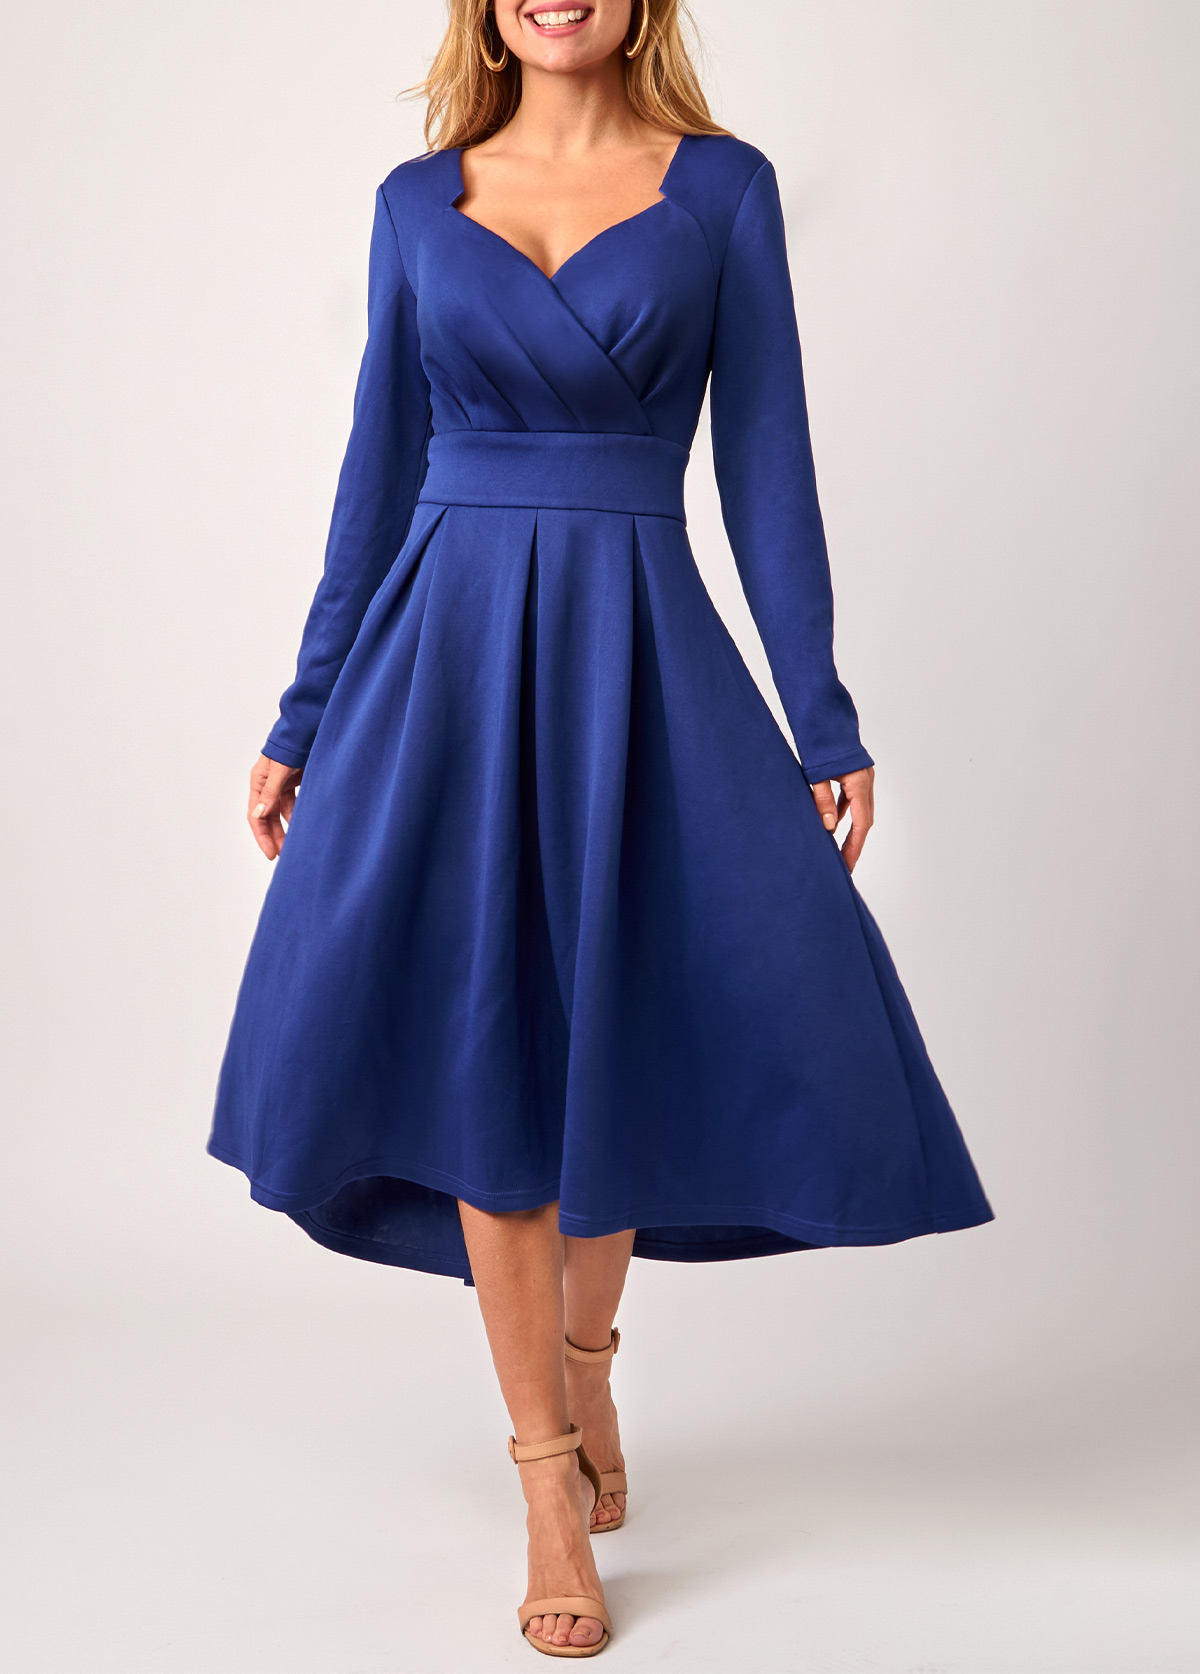 Cross Front Long Sleeve Royal Blue Dress